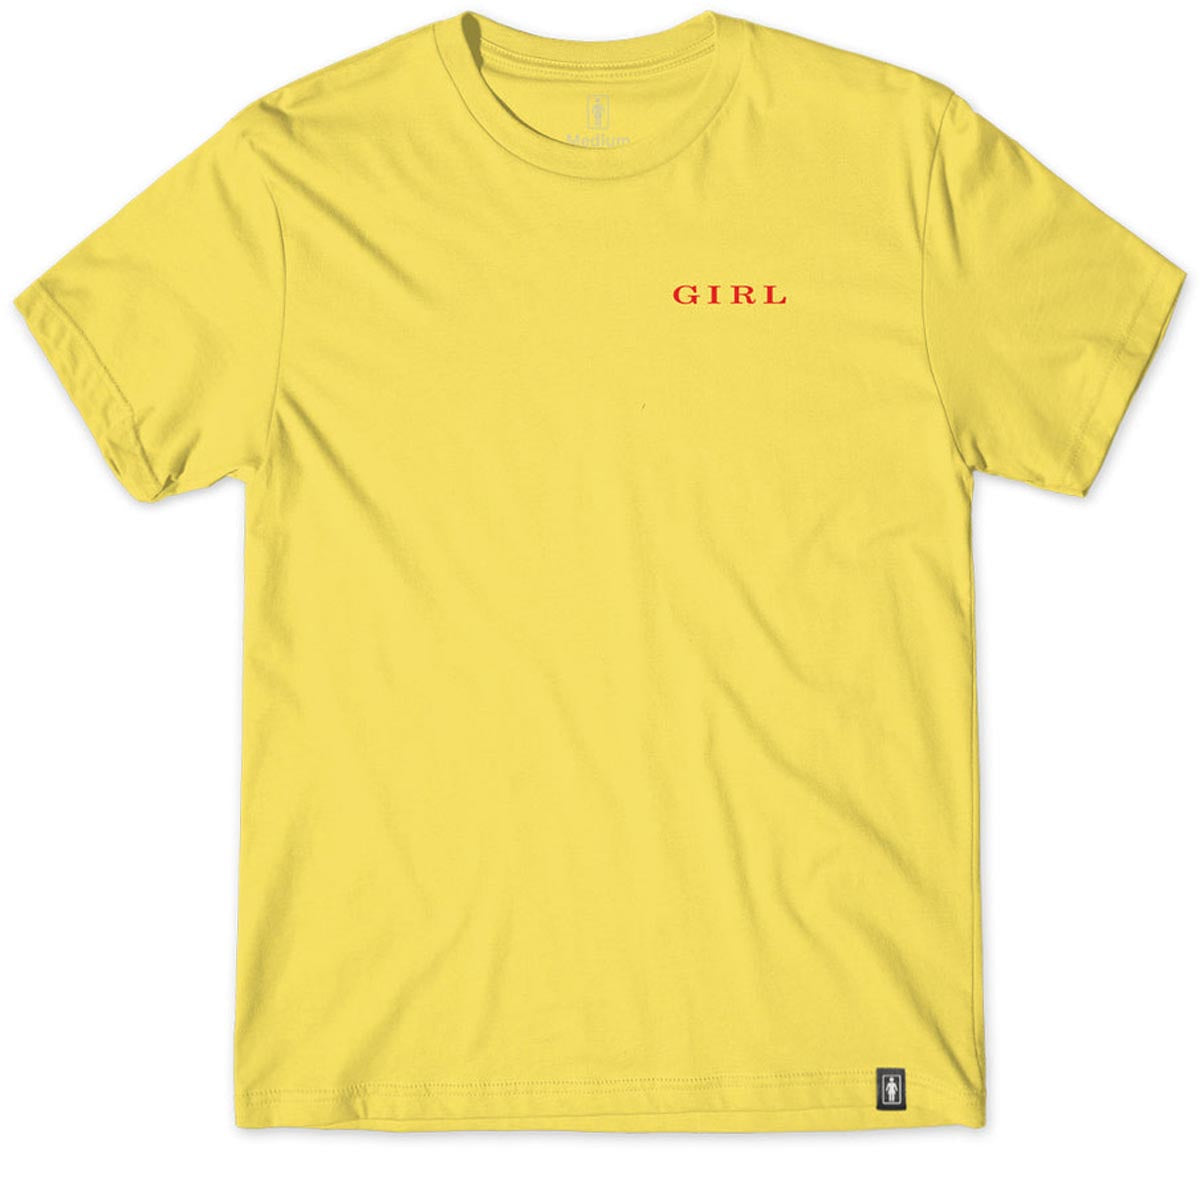 Girl Serif T-Shirt - Daisy image 1